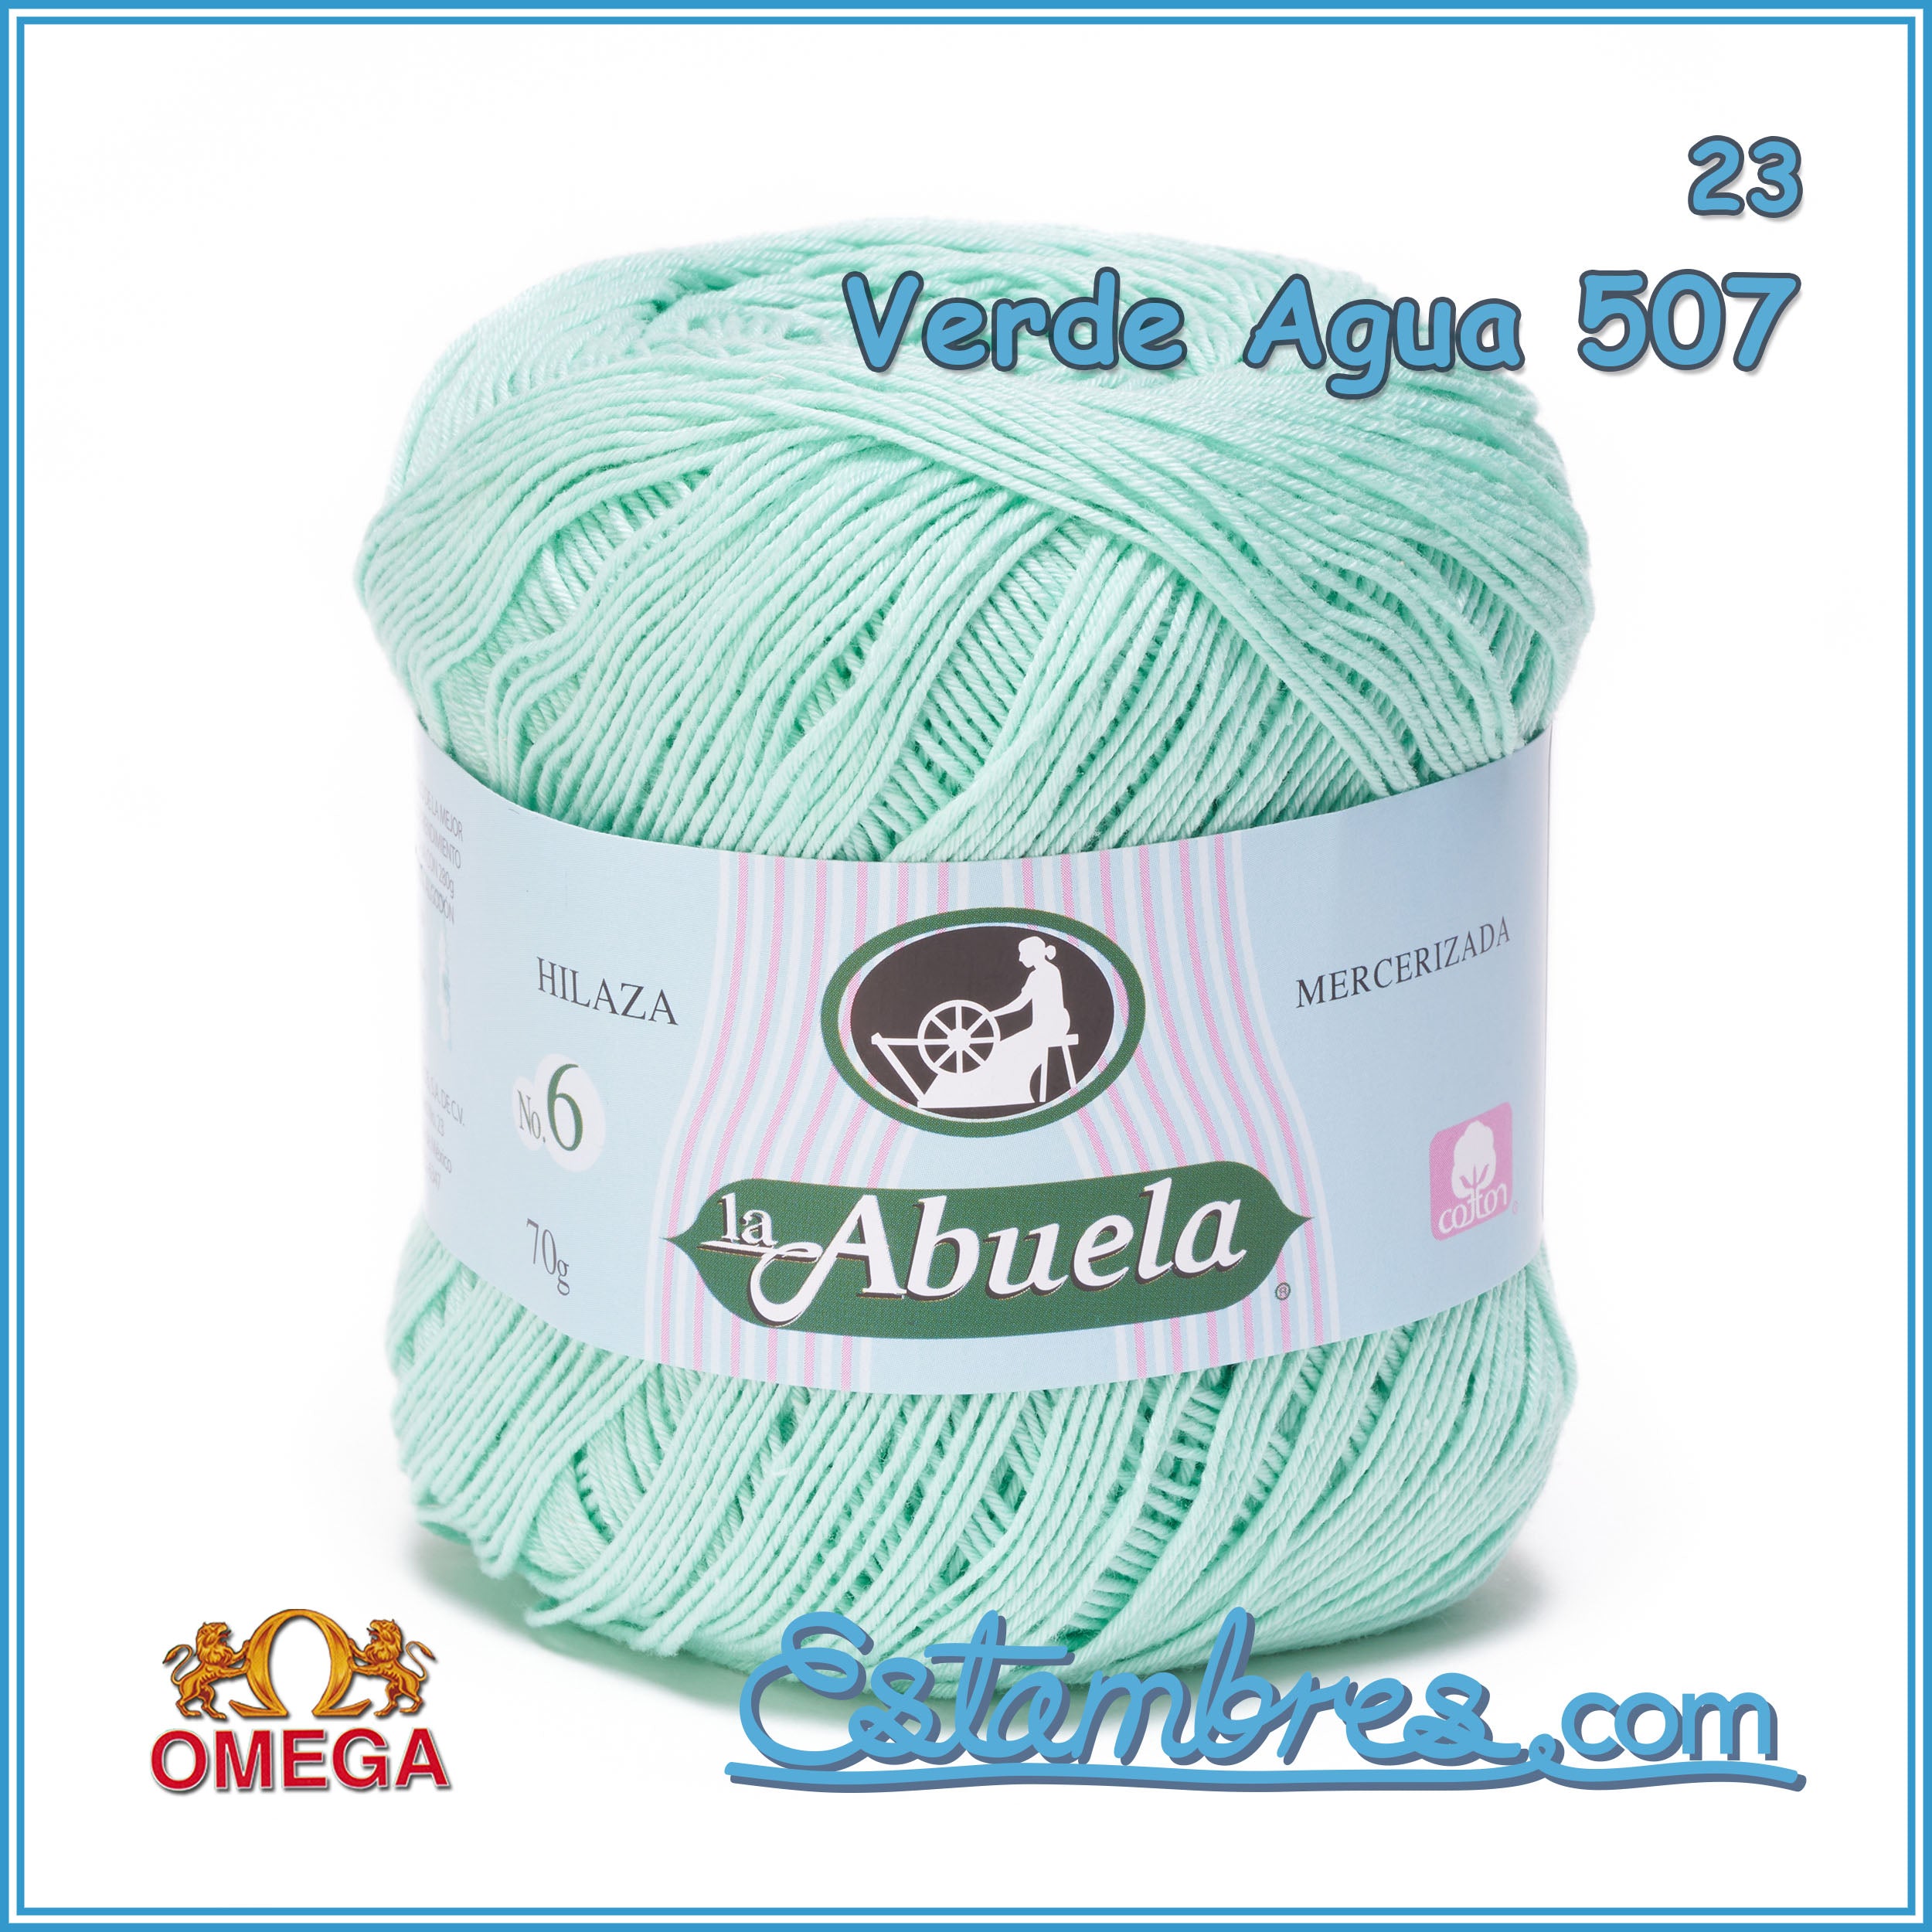 Abuela No.6,Cotton Omega 100% Mercerized Cotton Yarn, Cotton Abuela Thread  Soft